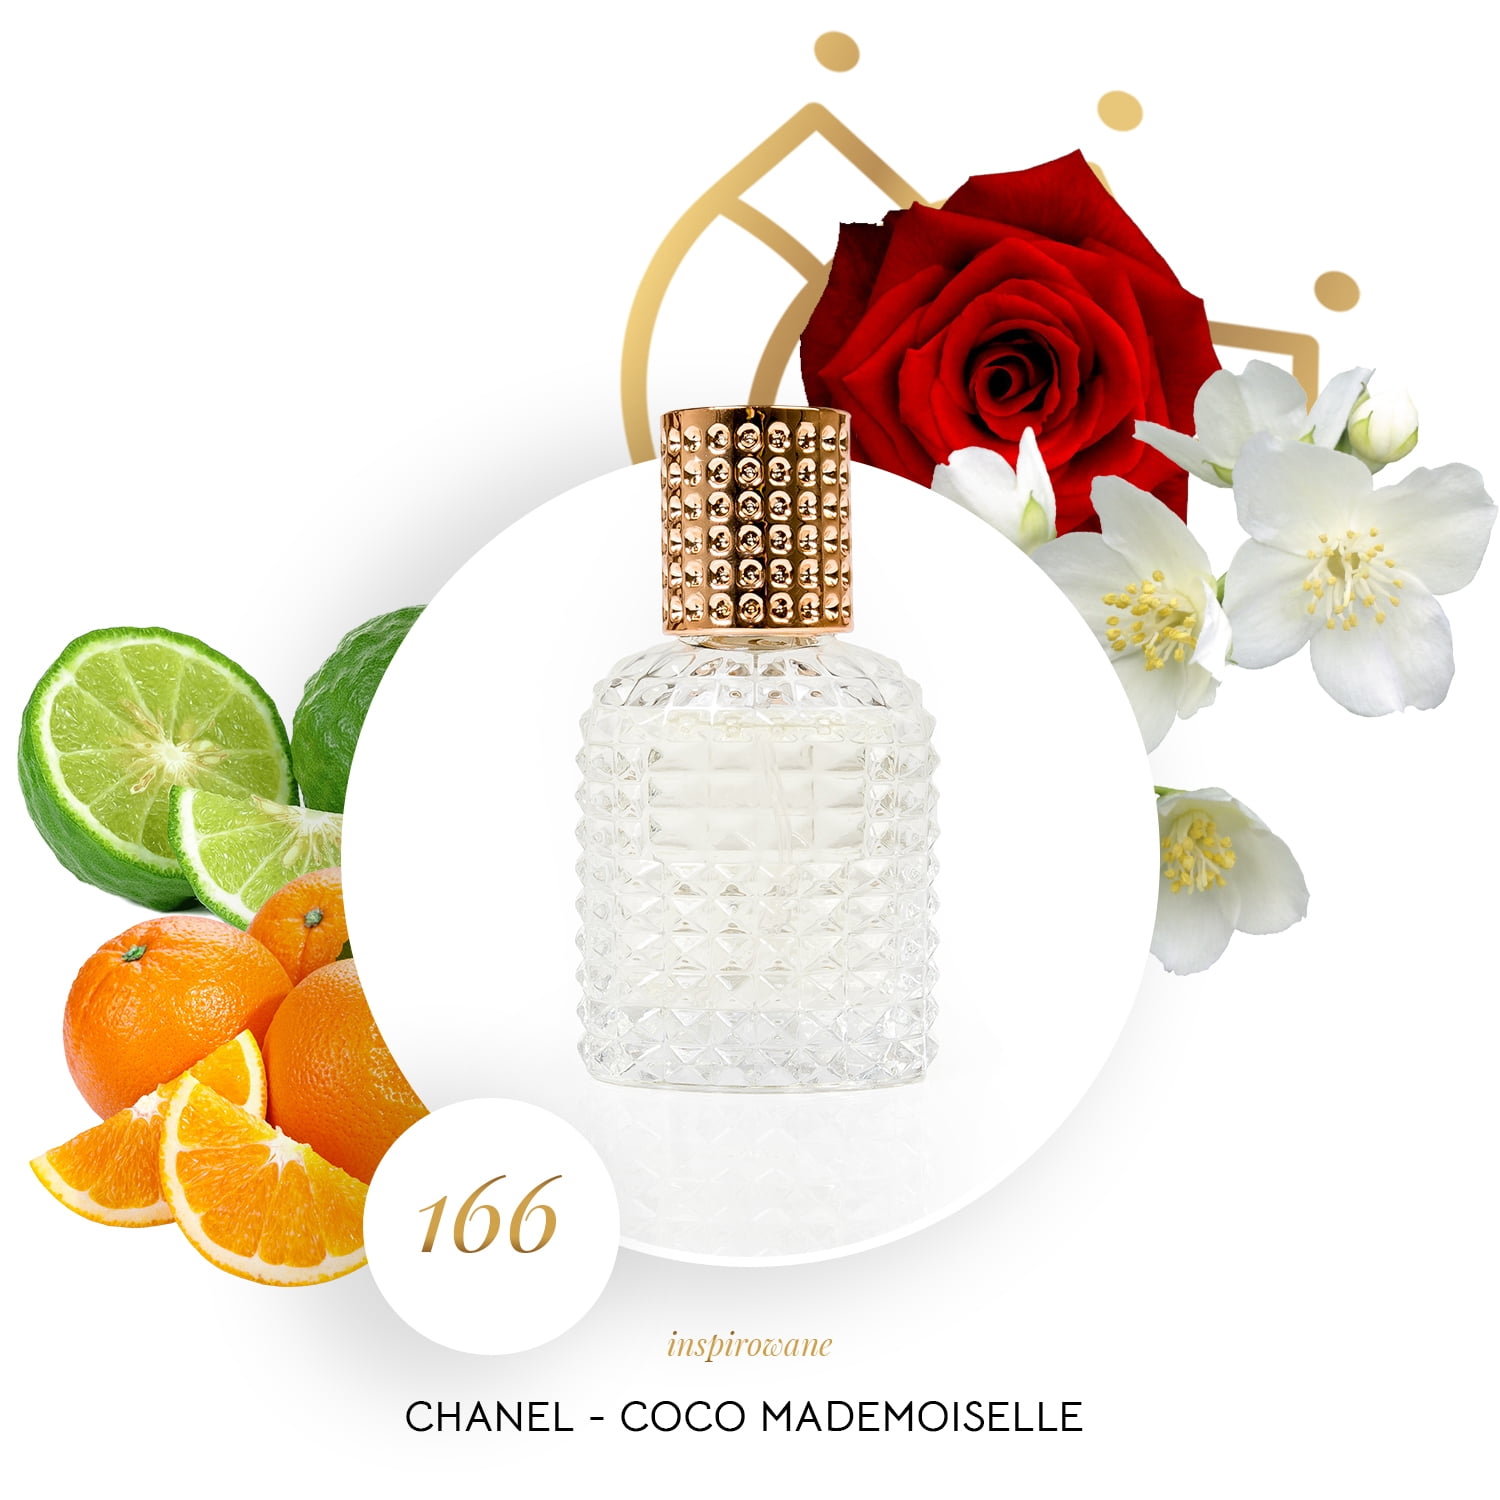 Perfumy 166 inspirowane Coco Mademoiselle / Chanel-30 ml Cristal